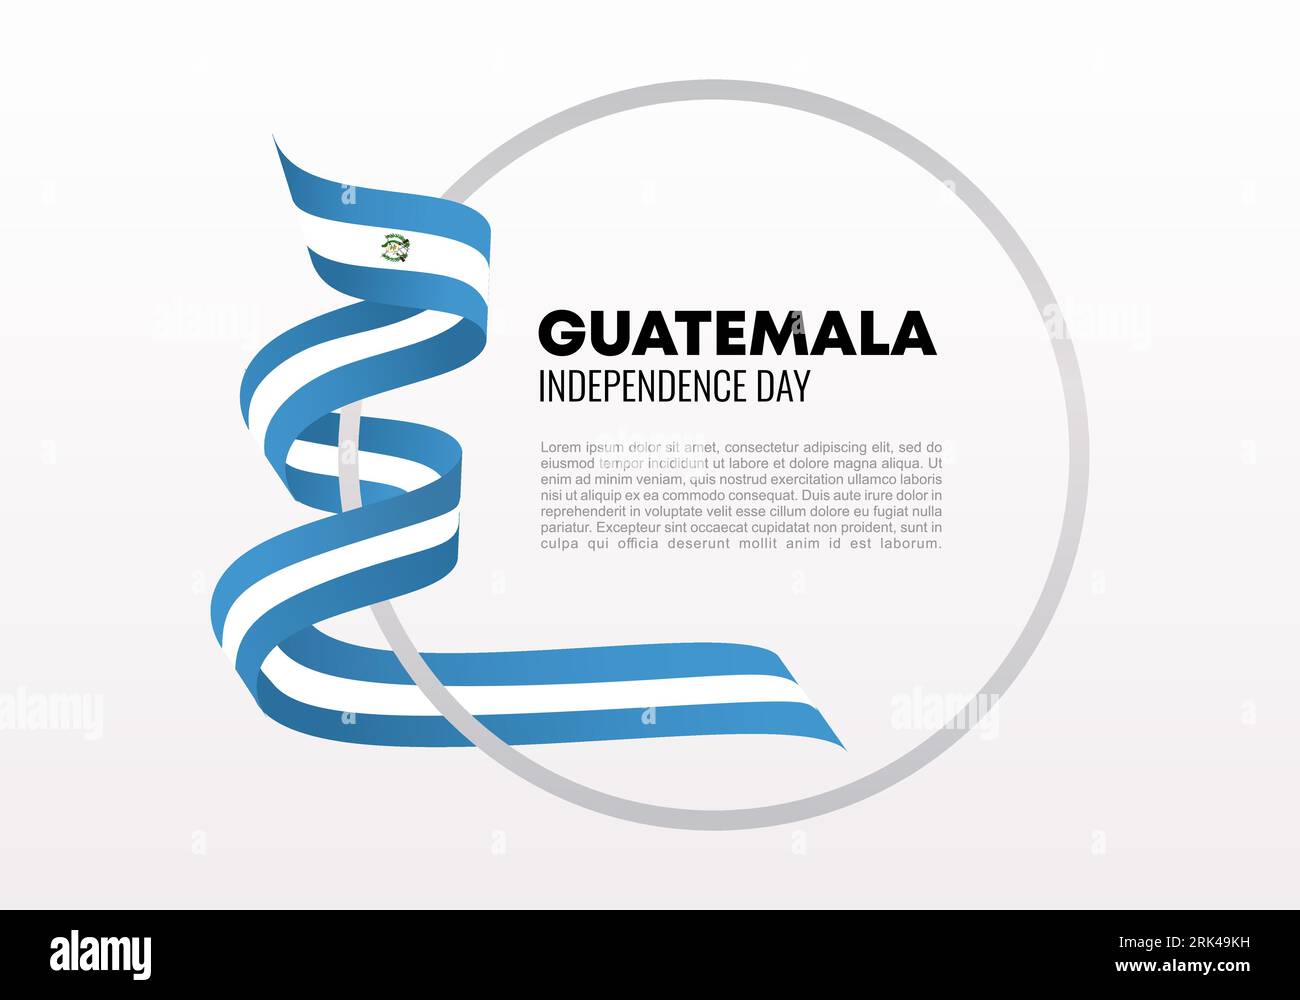 Guatemala independence day background for national celebration on september 15 isolated on white background. Stock Vector